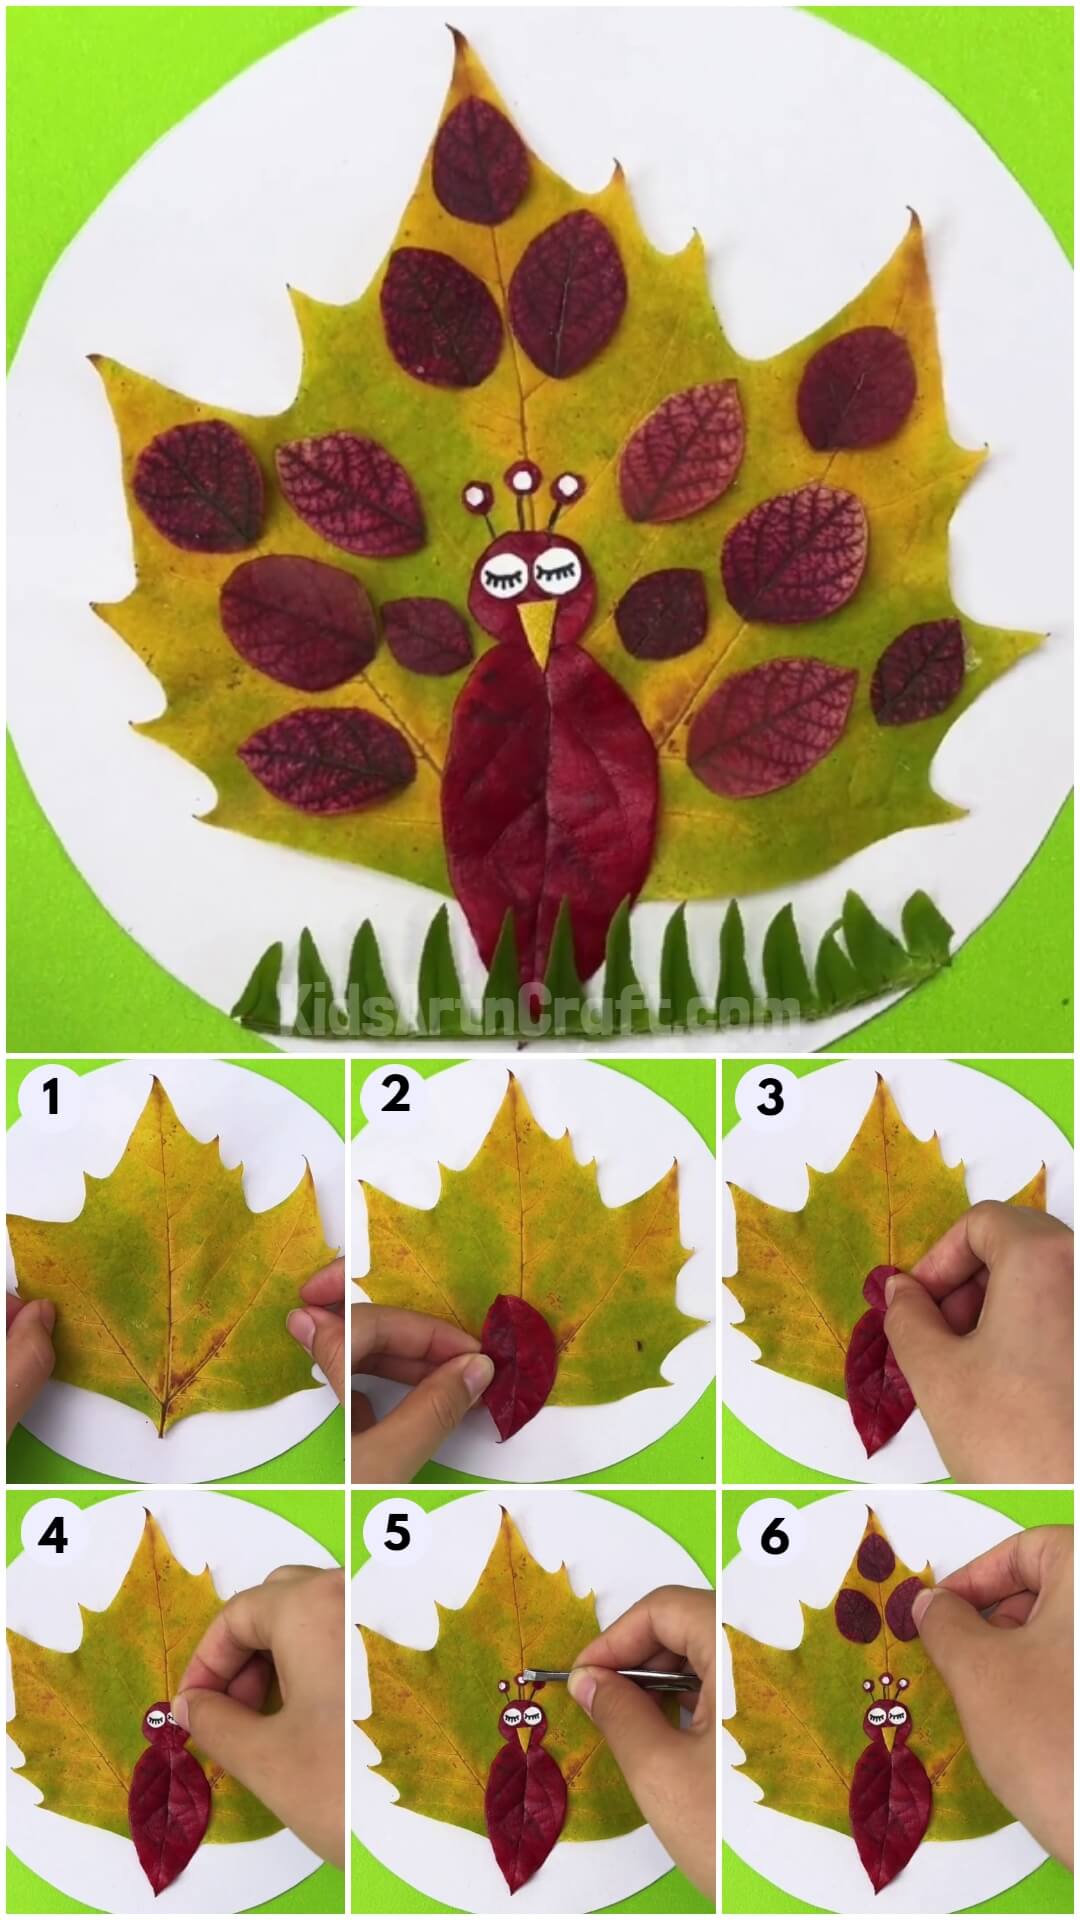  Leaf Turkey Craft Step By Step Tutorial For Kids